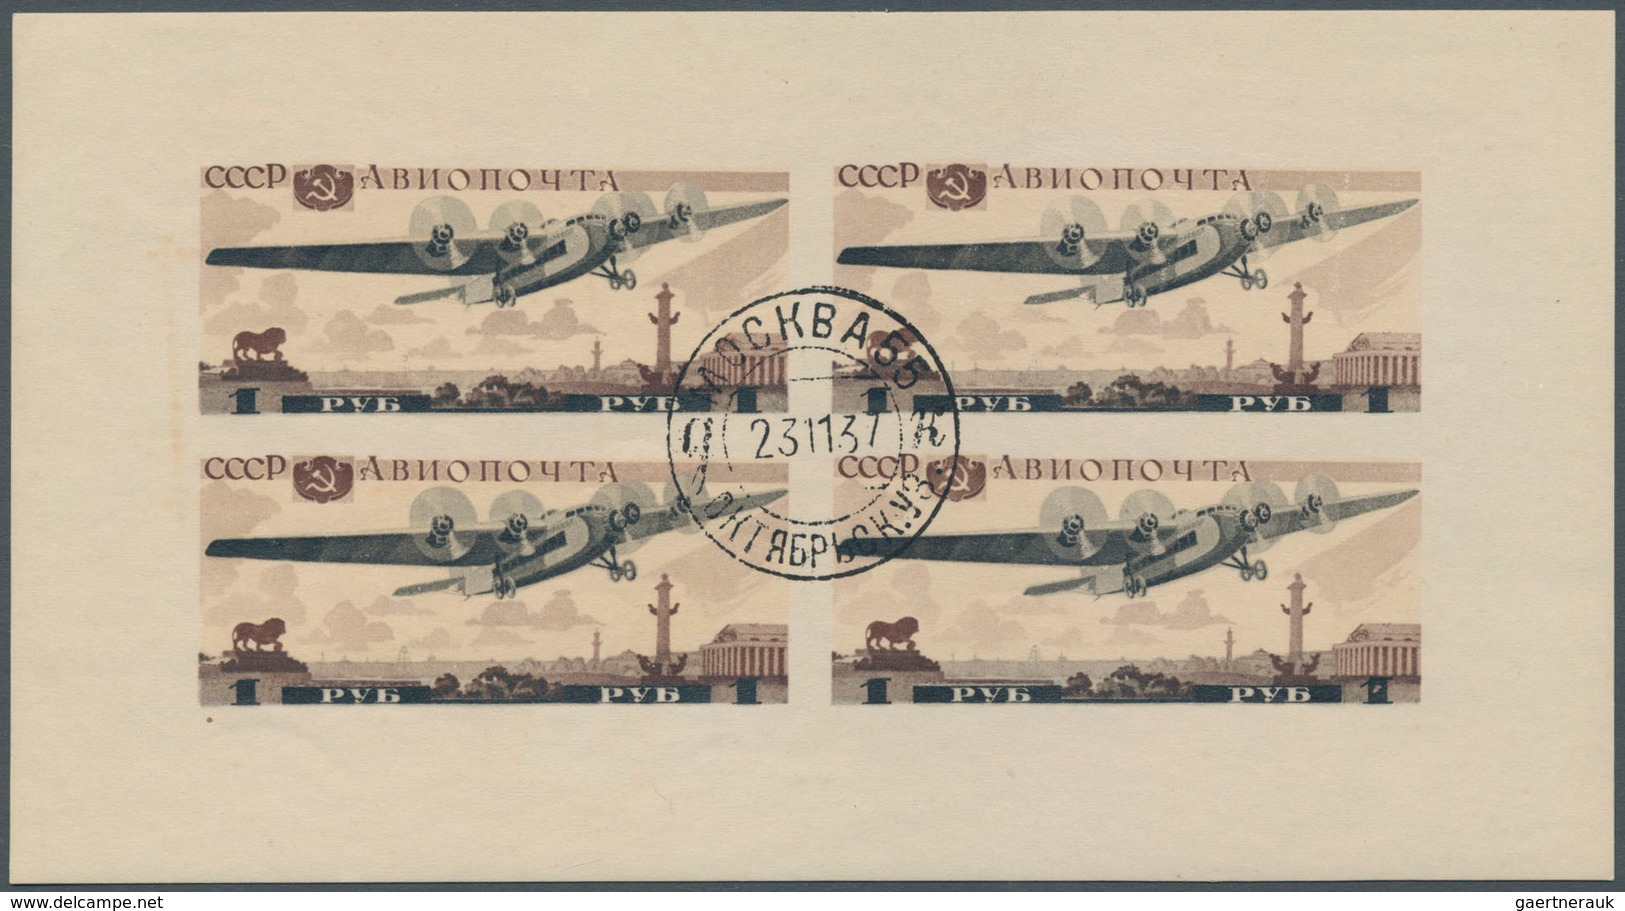 Sowjetunion: 1937 'Allunion' Souvenir Sheet, Cancelled "MOCKBA 55/23.11.37" Cds, Fine. (Mi. 600 €) - Usati